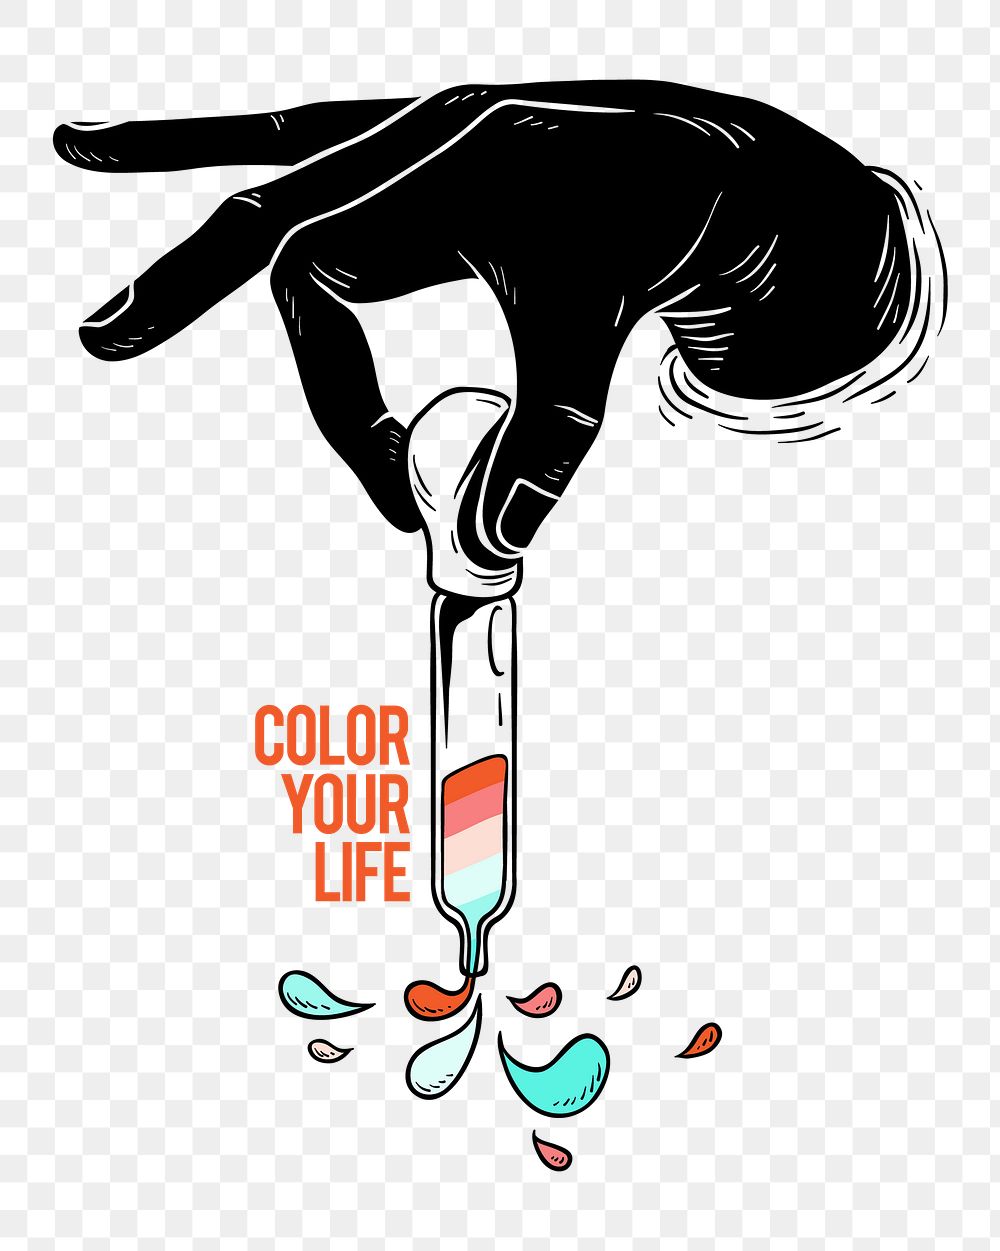 Png color your life element, transparent background